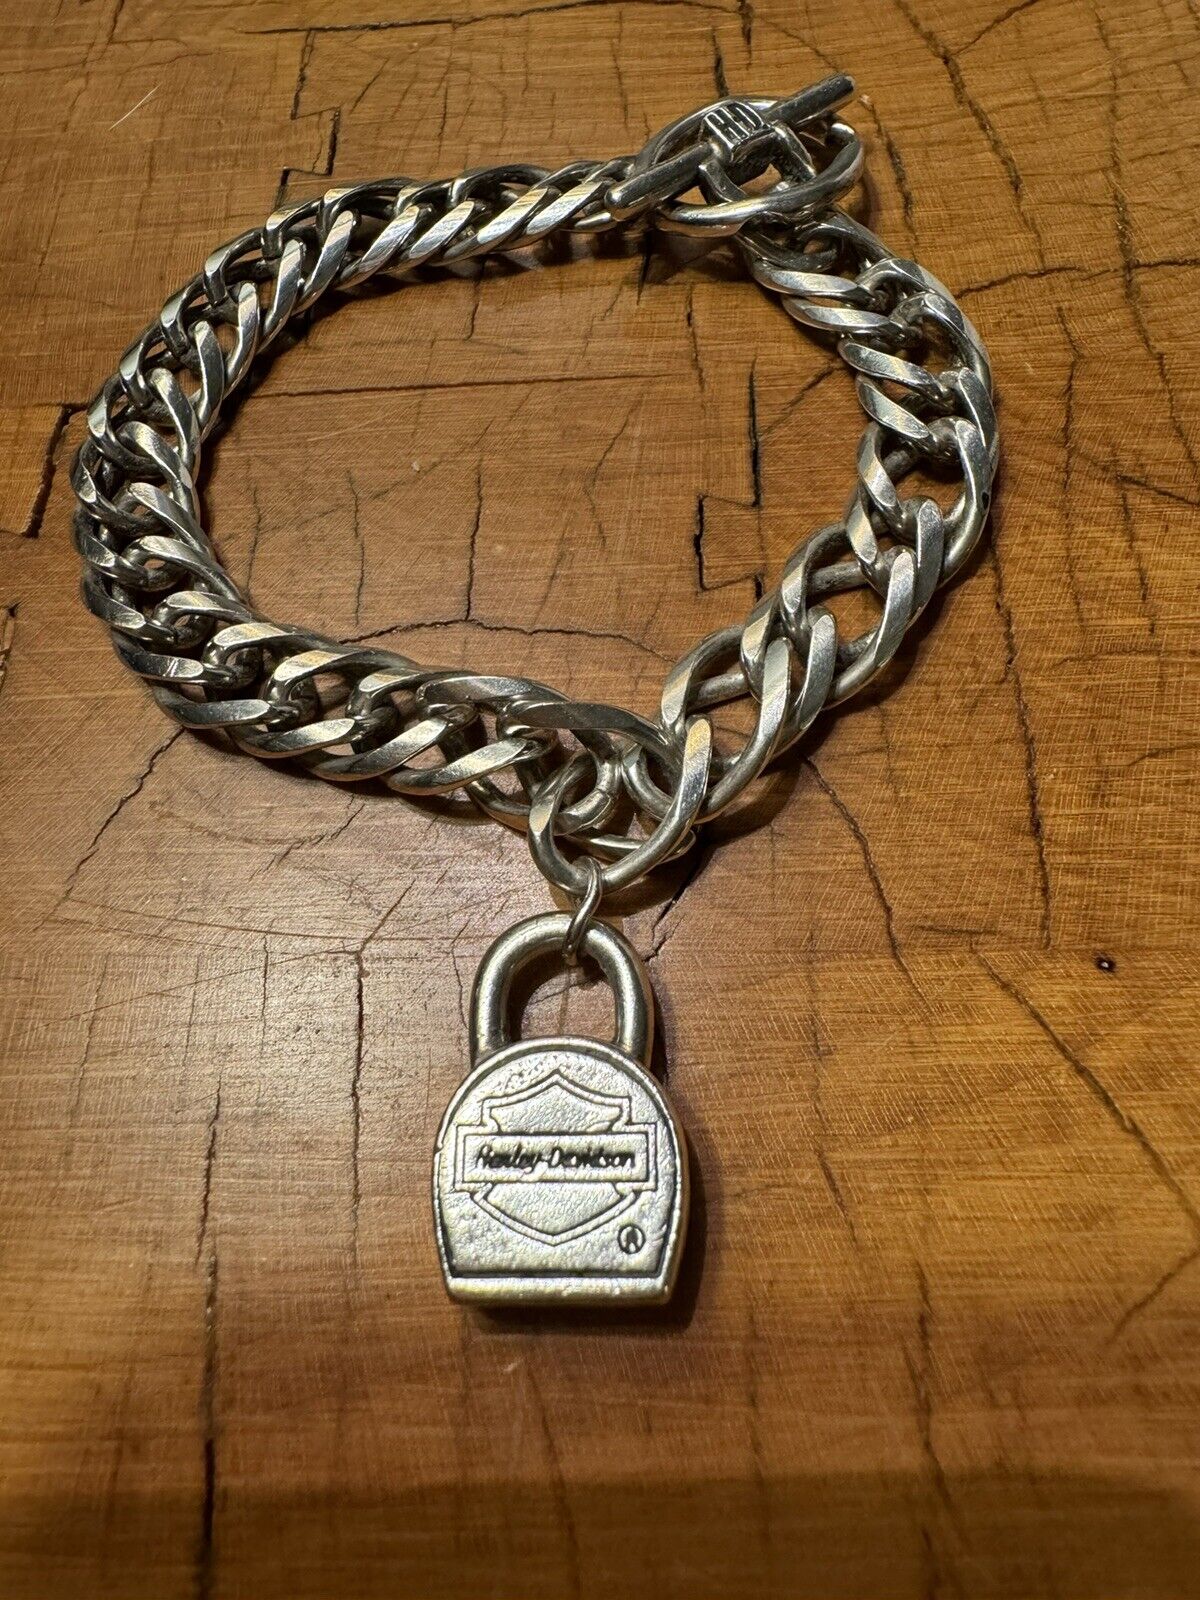 1991 Harley Davidson Women’s Bracelet Sterling Silver Chain Link  Toggle Clasp